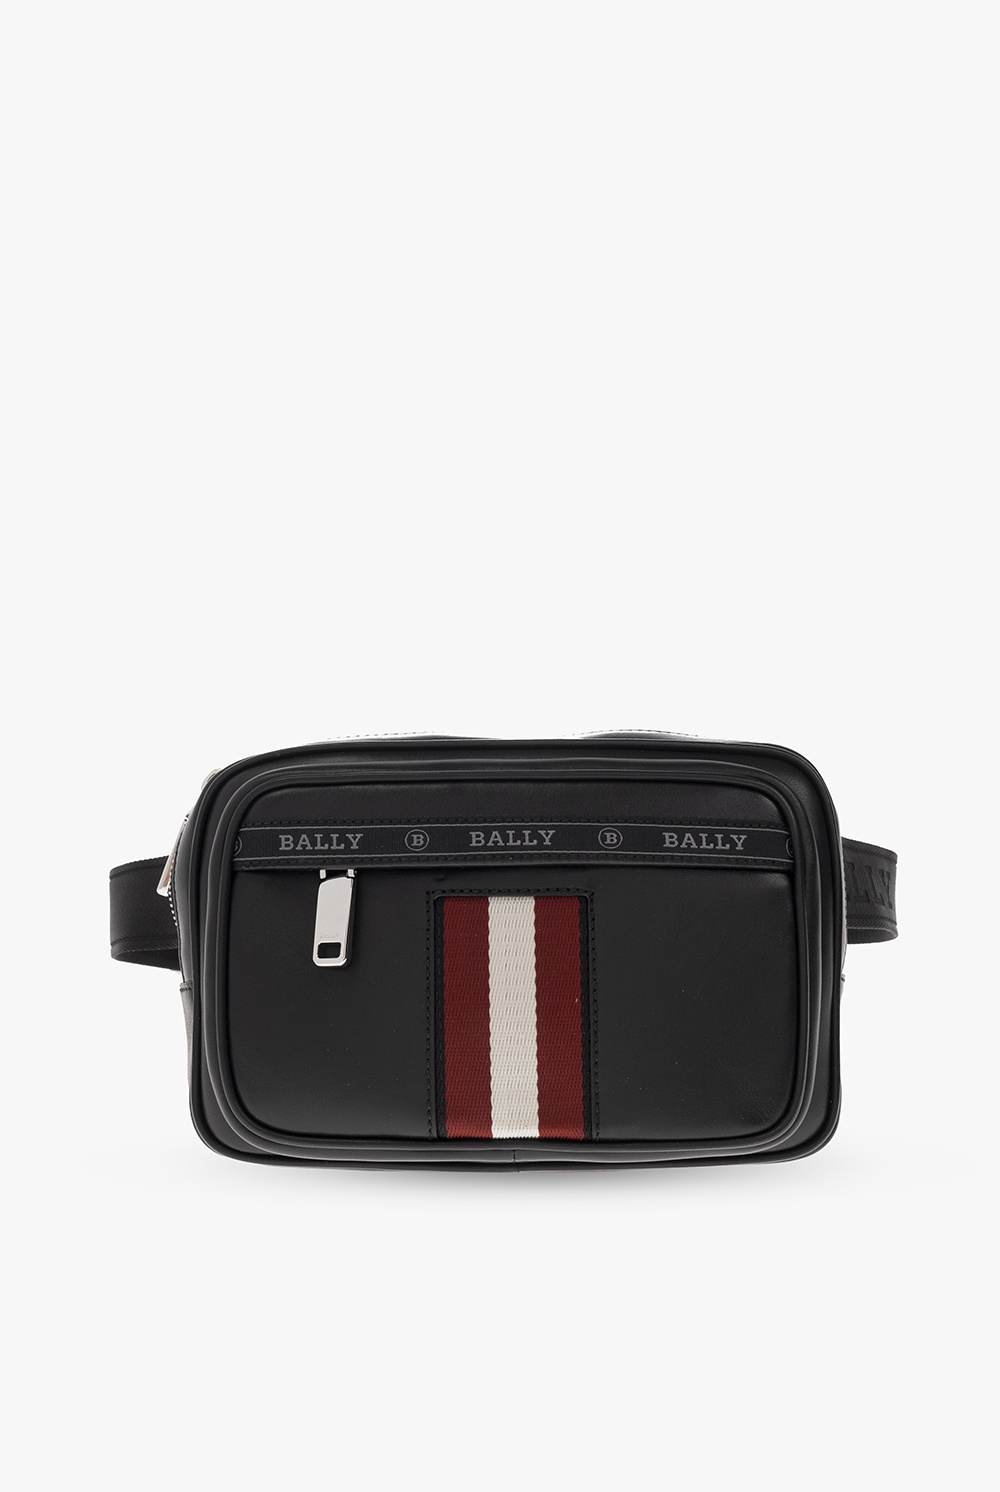 Moschino quilted logo tote bag - GenesinlifeShops Canada - Black 'Hilbert'  belt bag Bally